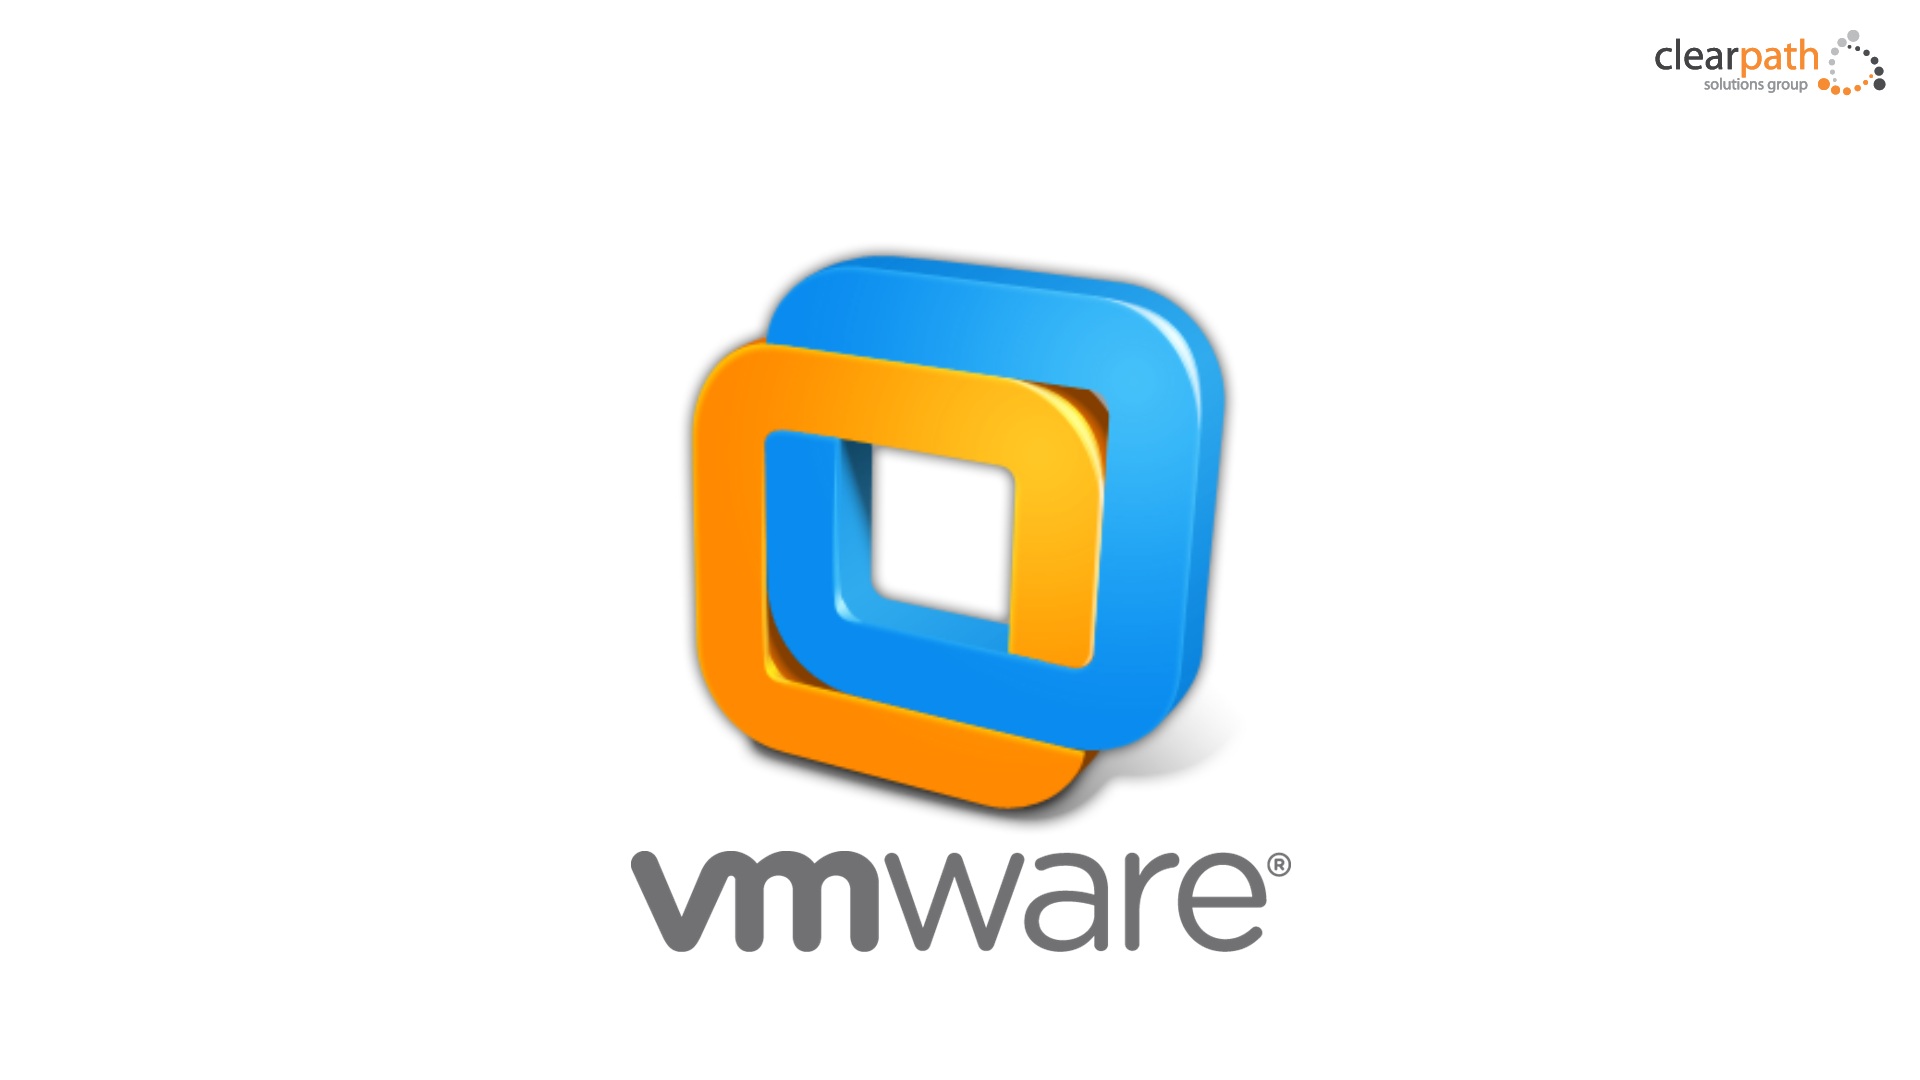 vmware virtual desktop